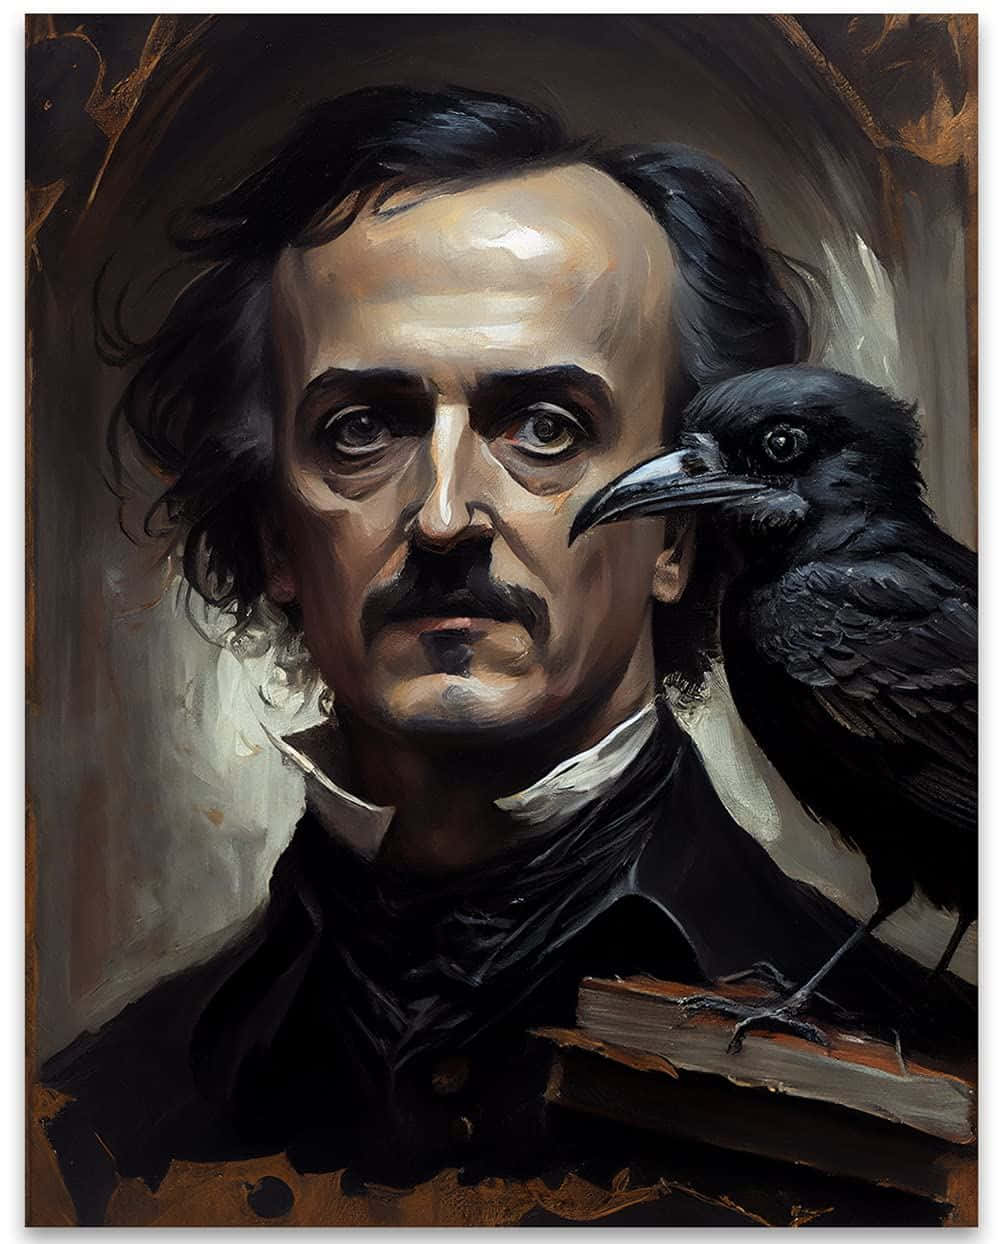 Edgar Allan Poeand Raven